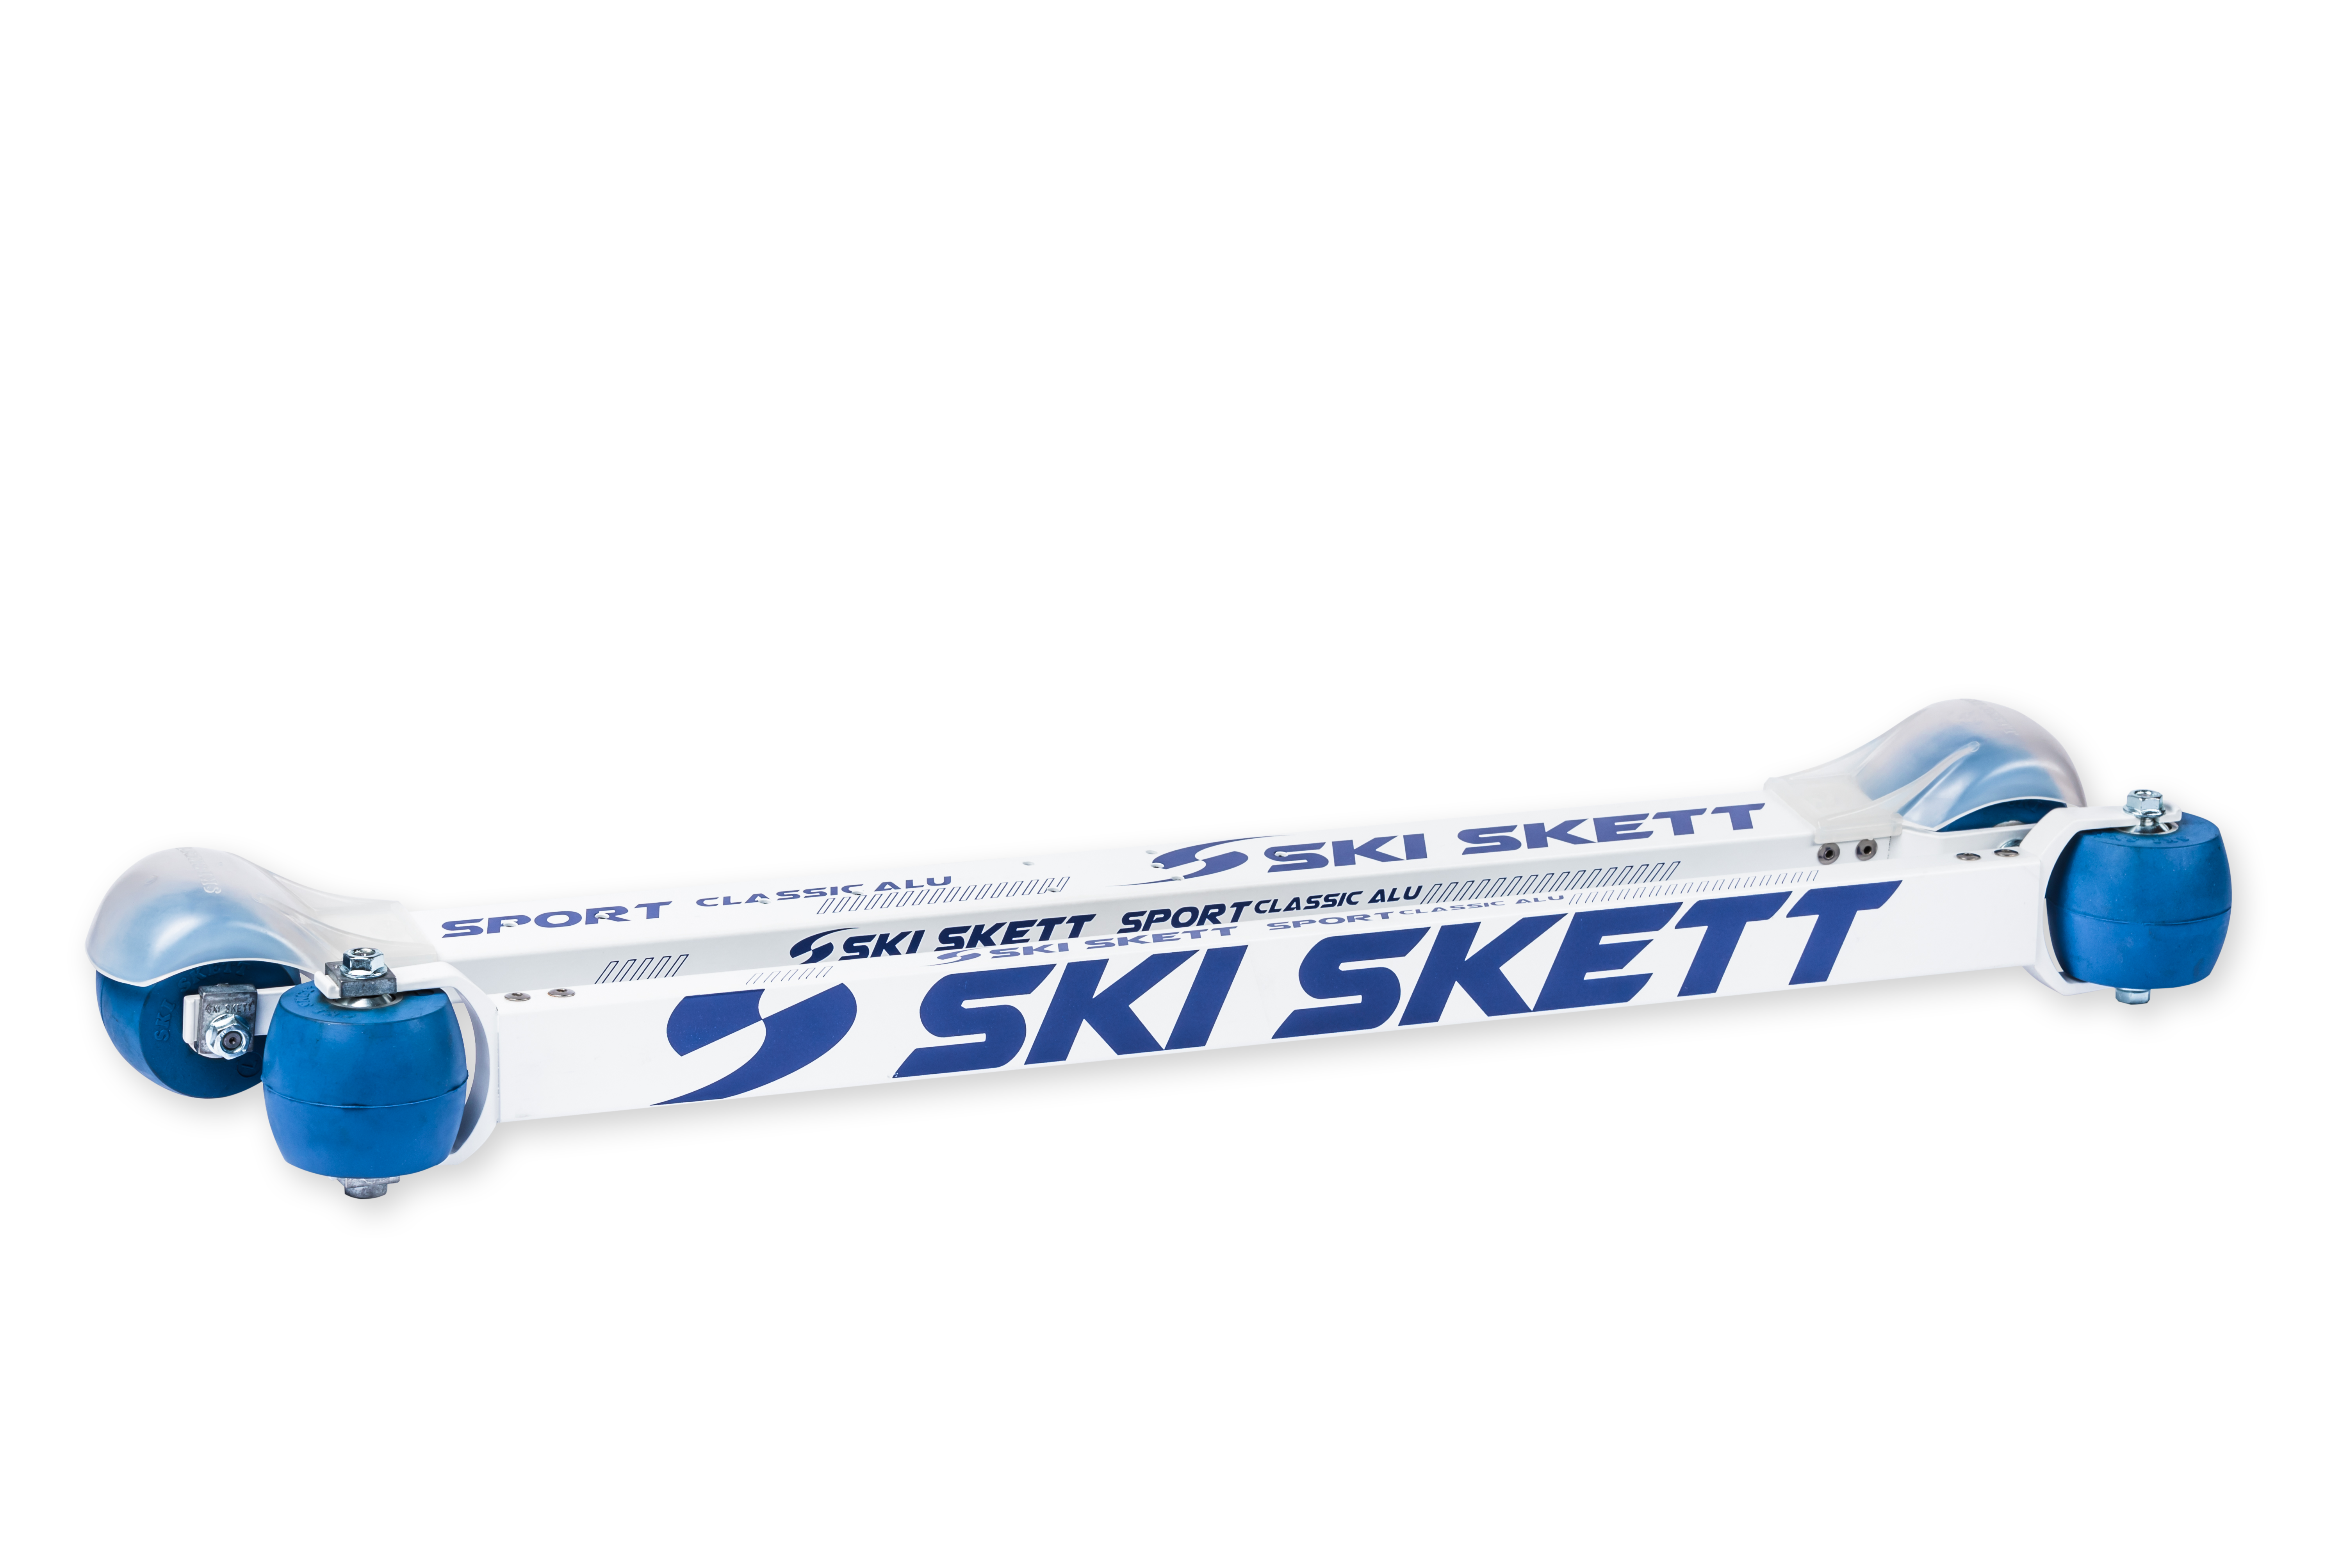 Skiroll, roller ski, rolski, rullerski, nordicski, classic